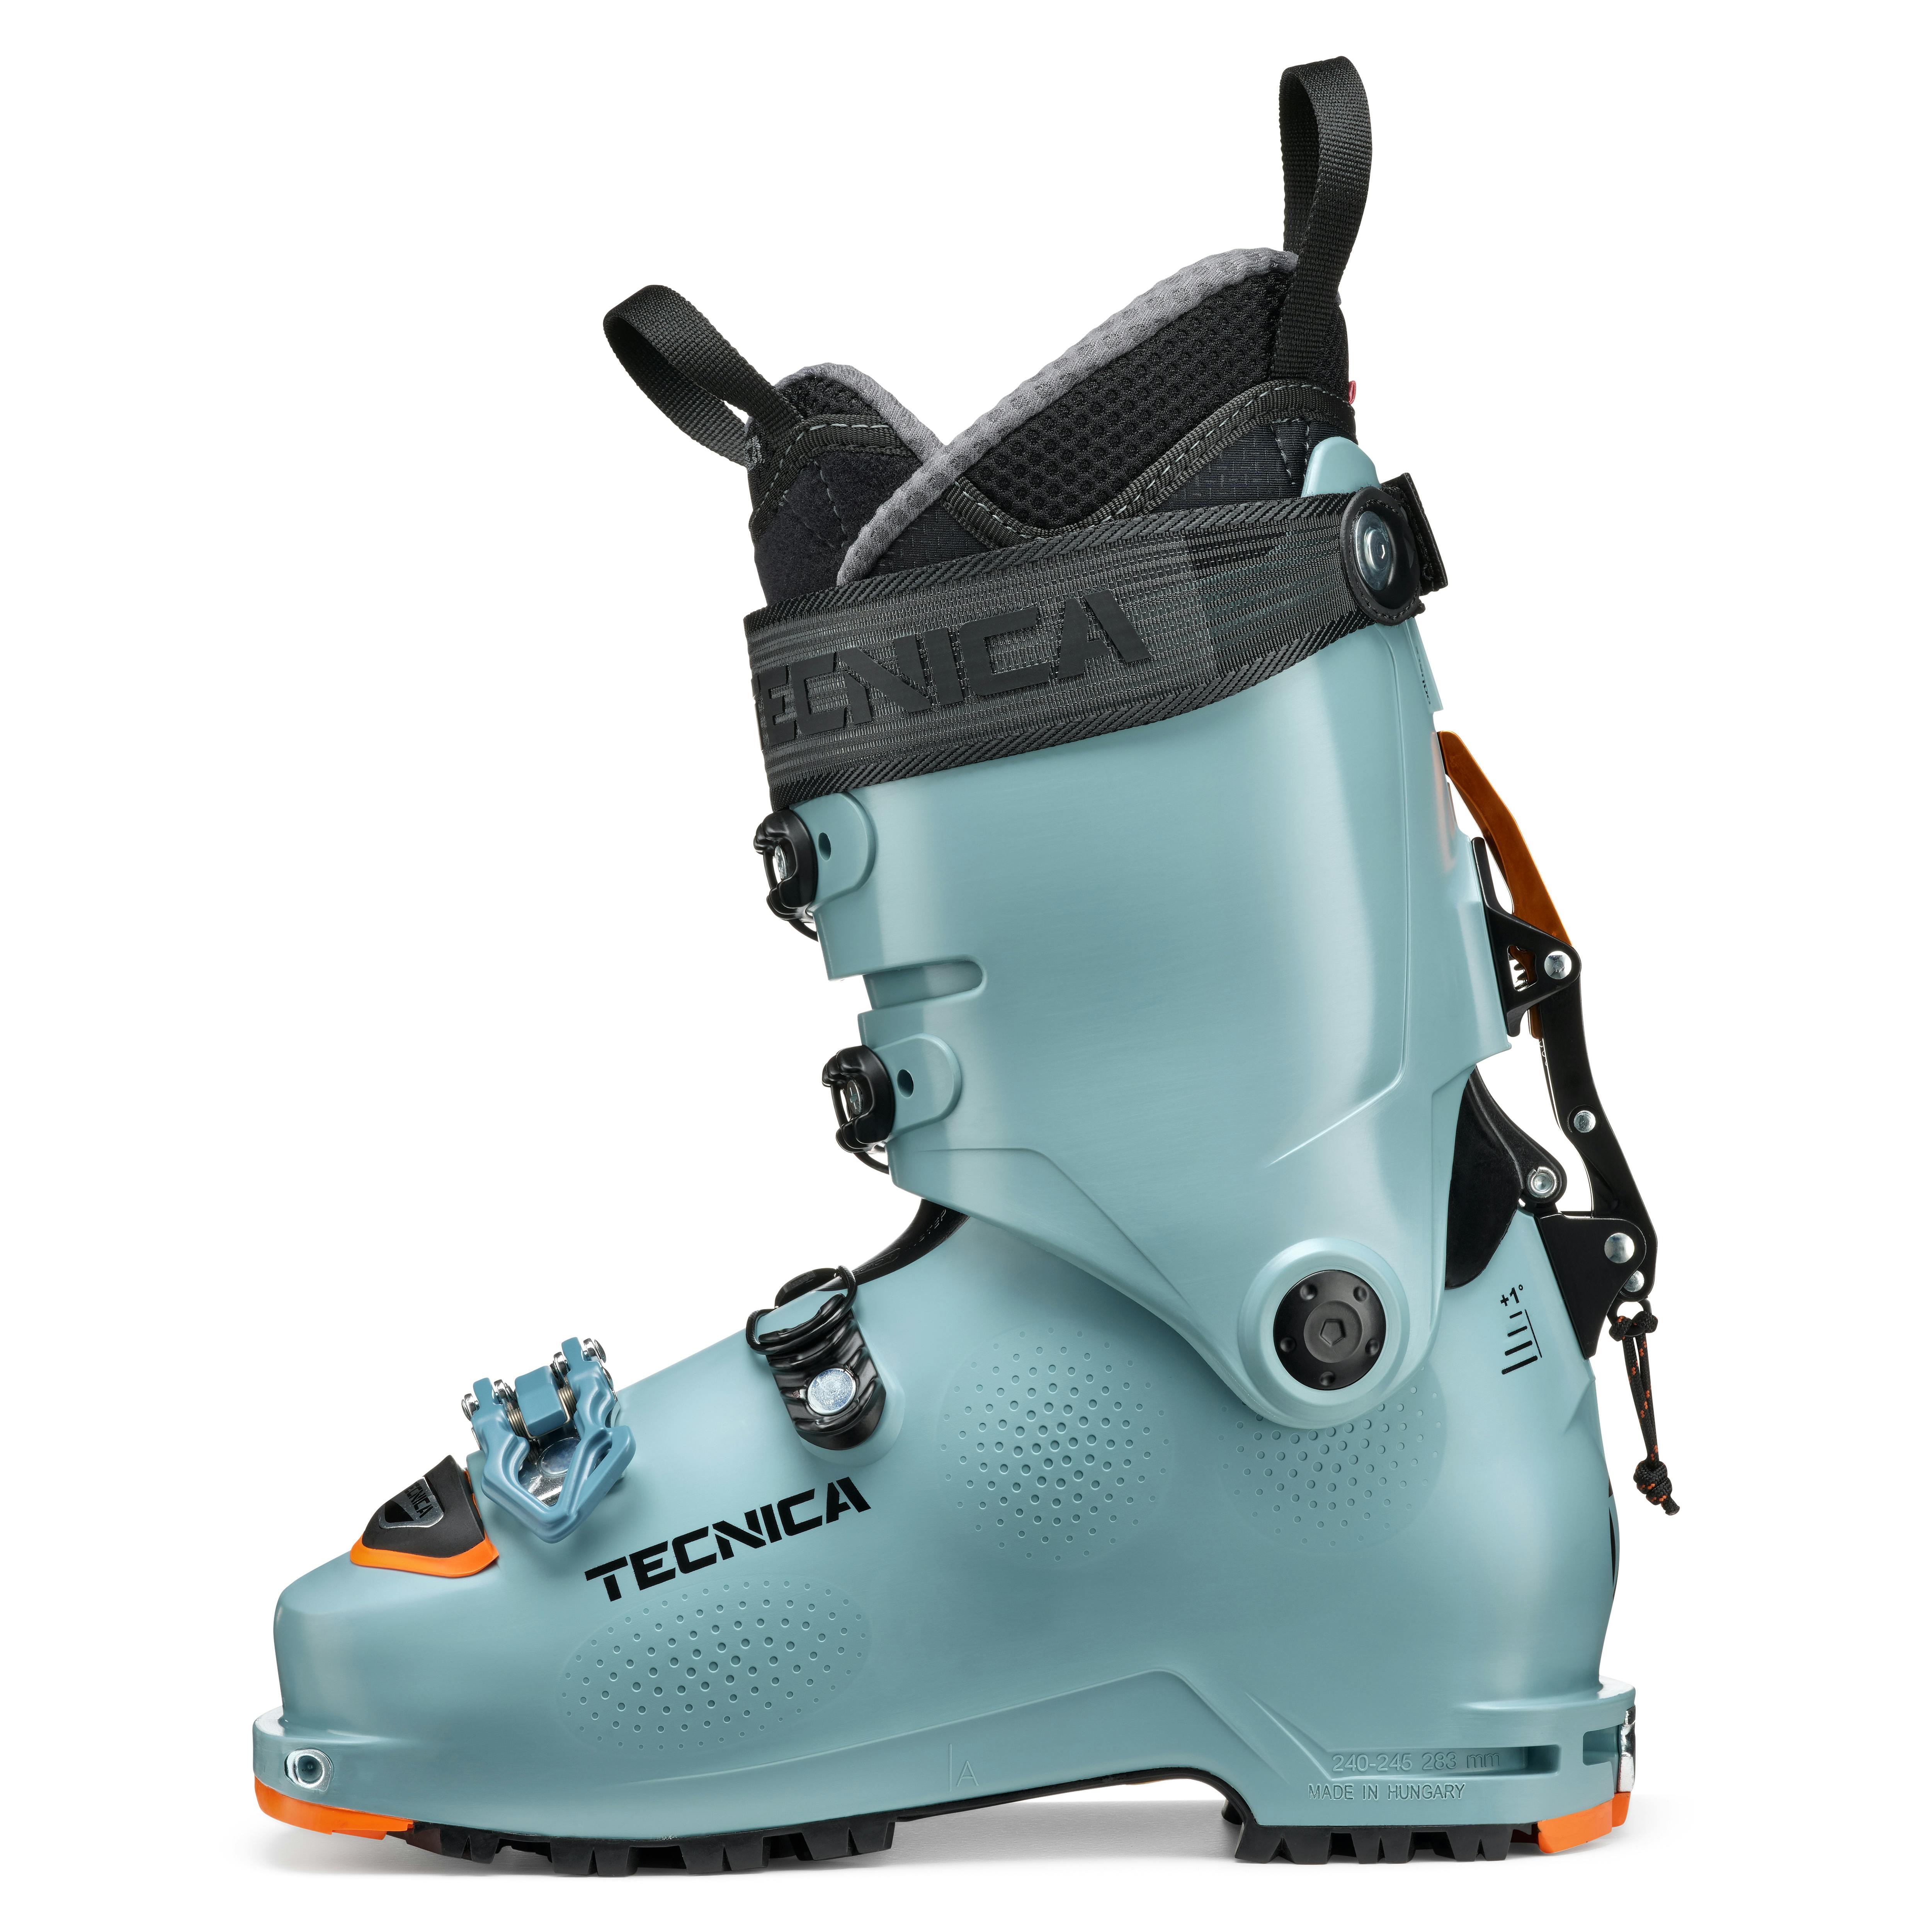 Tecnica Zero G Tour Scout Ski Boots · Women's · 2023